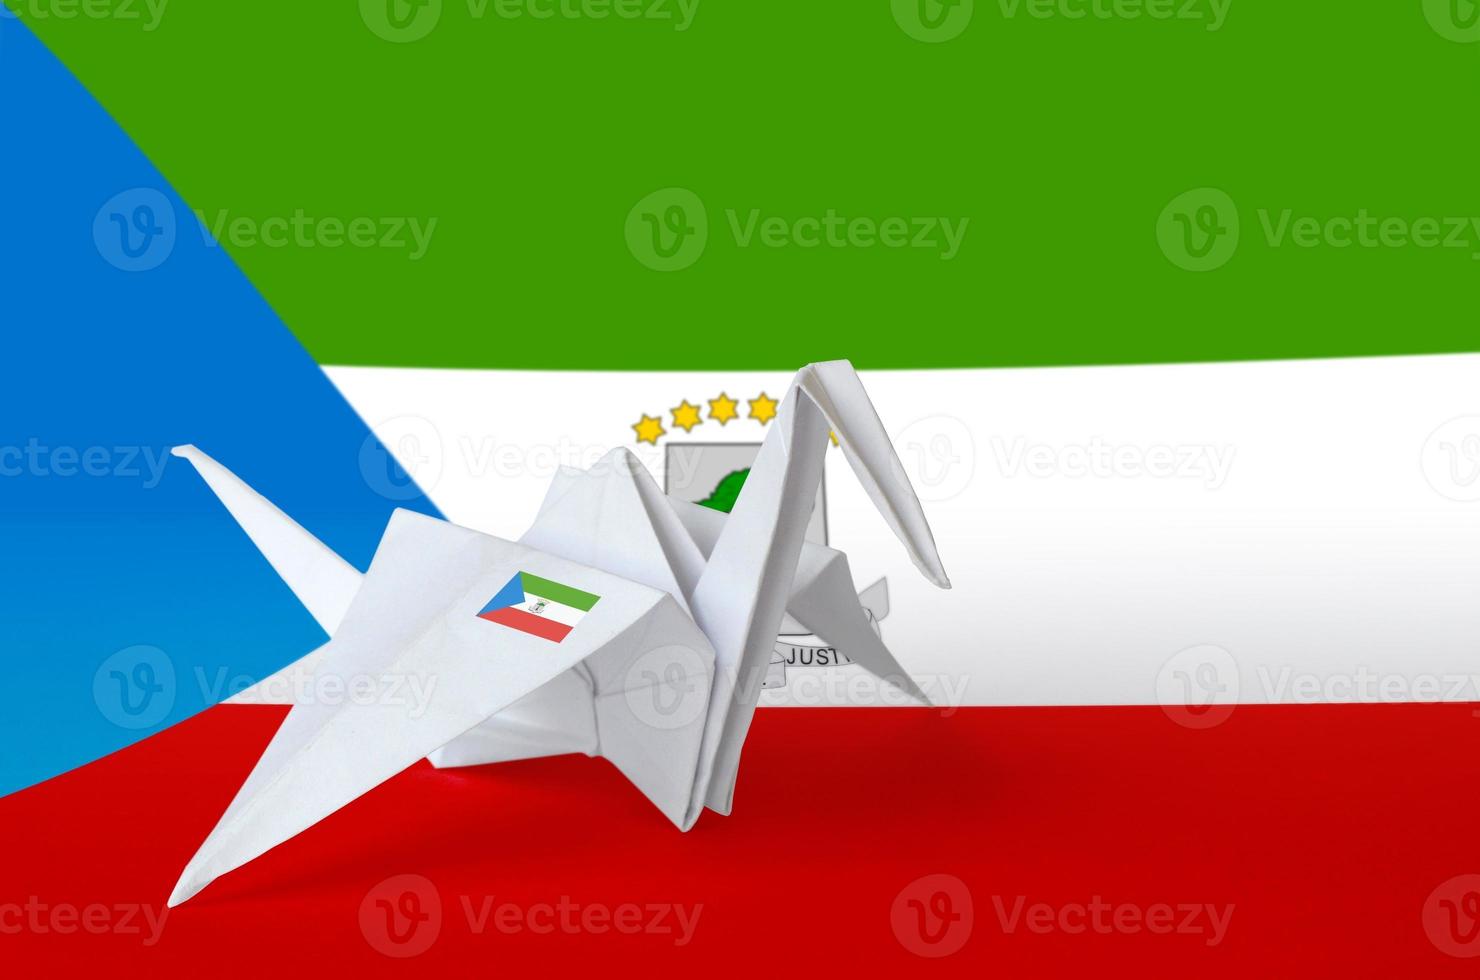 Equatorial Guinea flag depicted on paper origami crane wing. Handmade arts concept photo